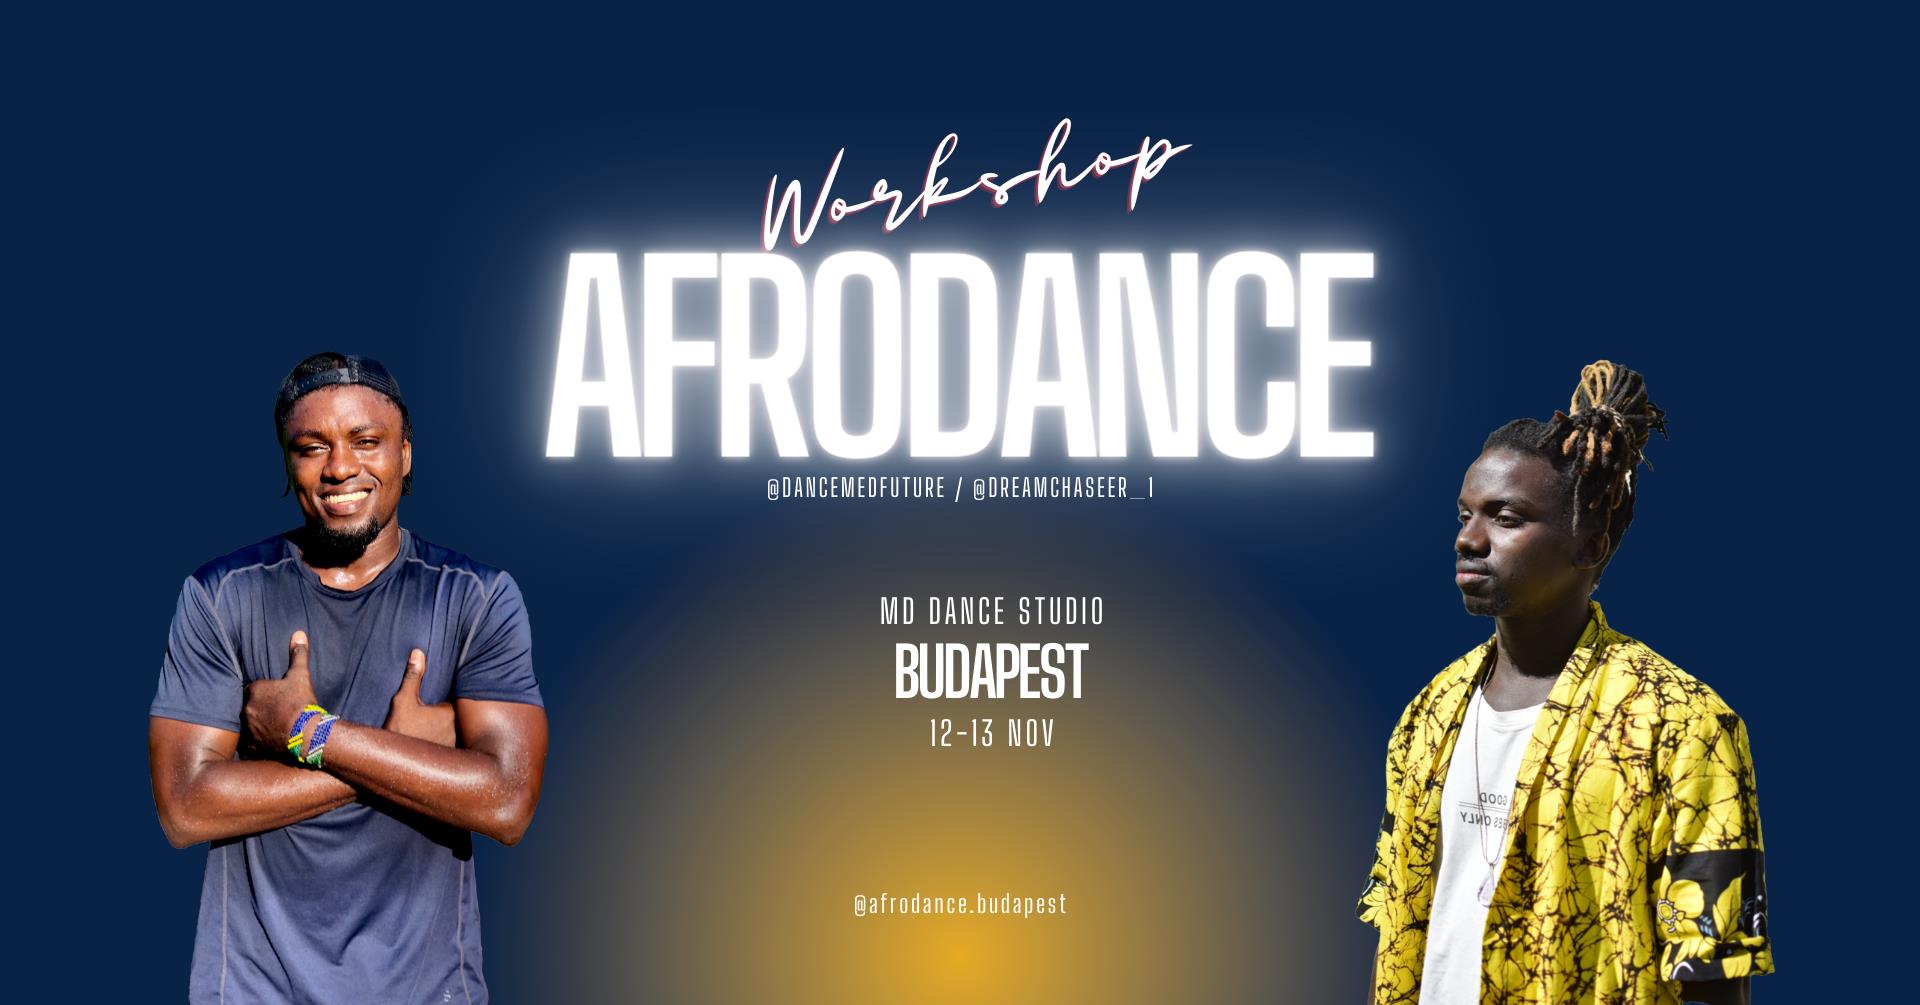 Afrodance Workshop, MD Dance Studio Budapest, 12 – 13 November